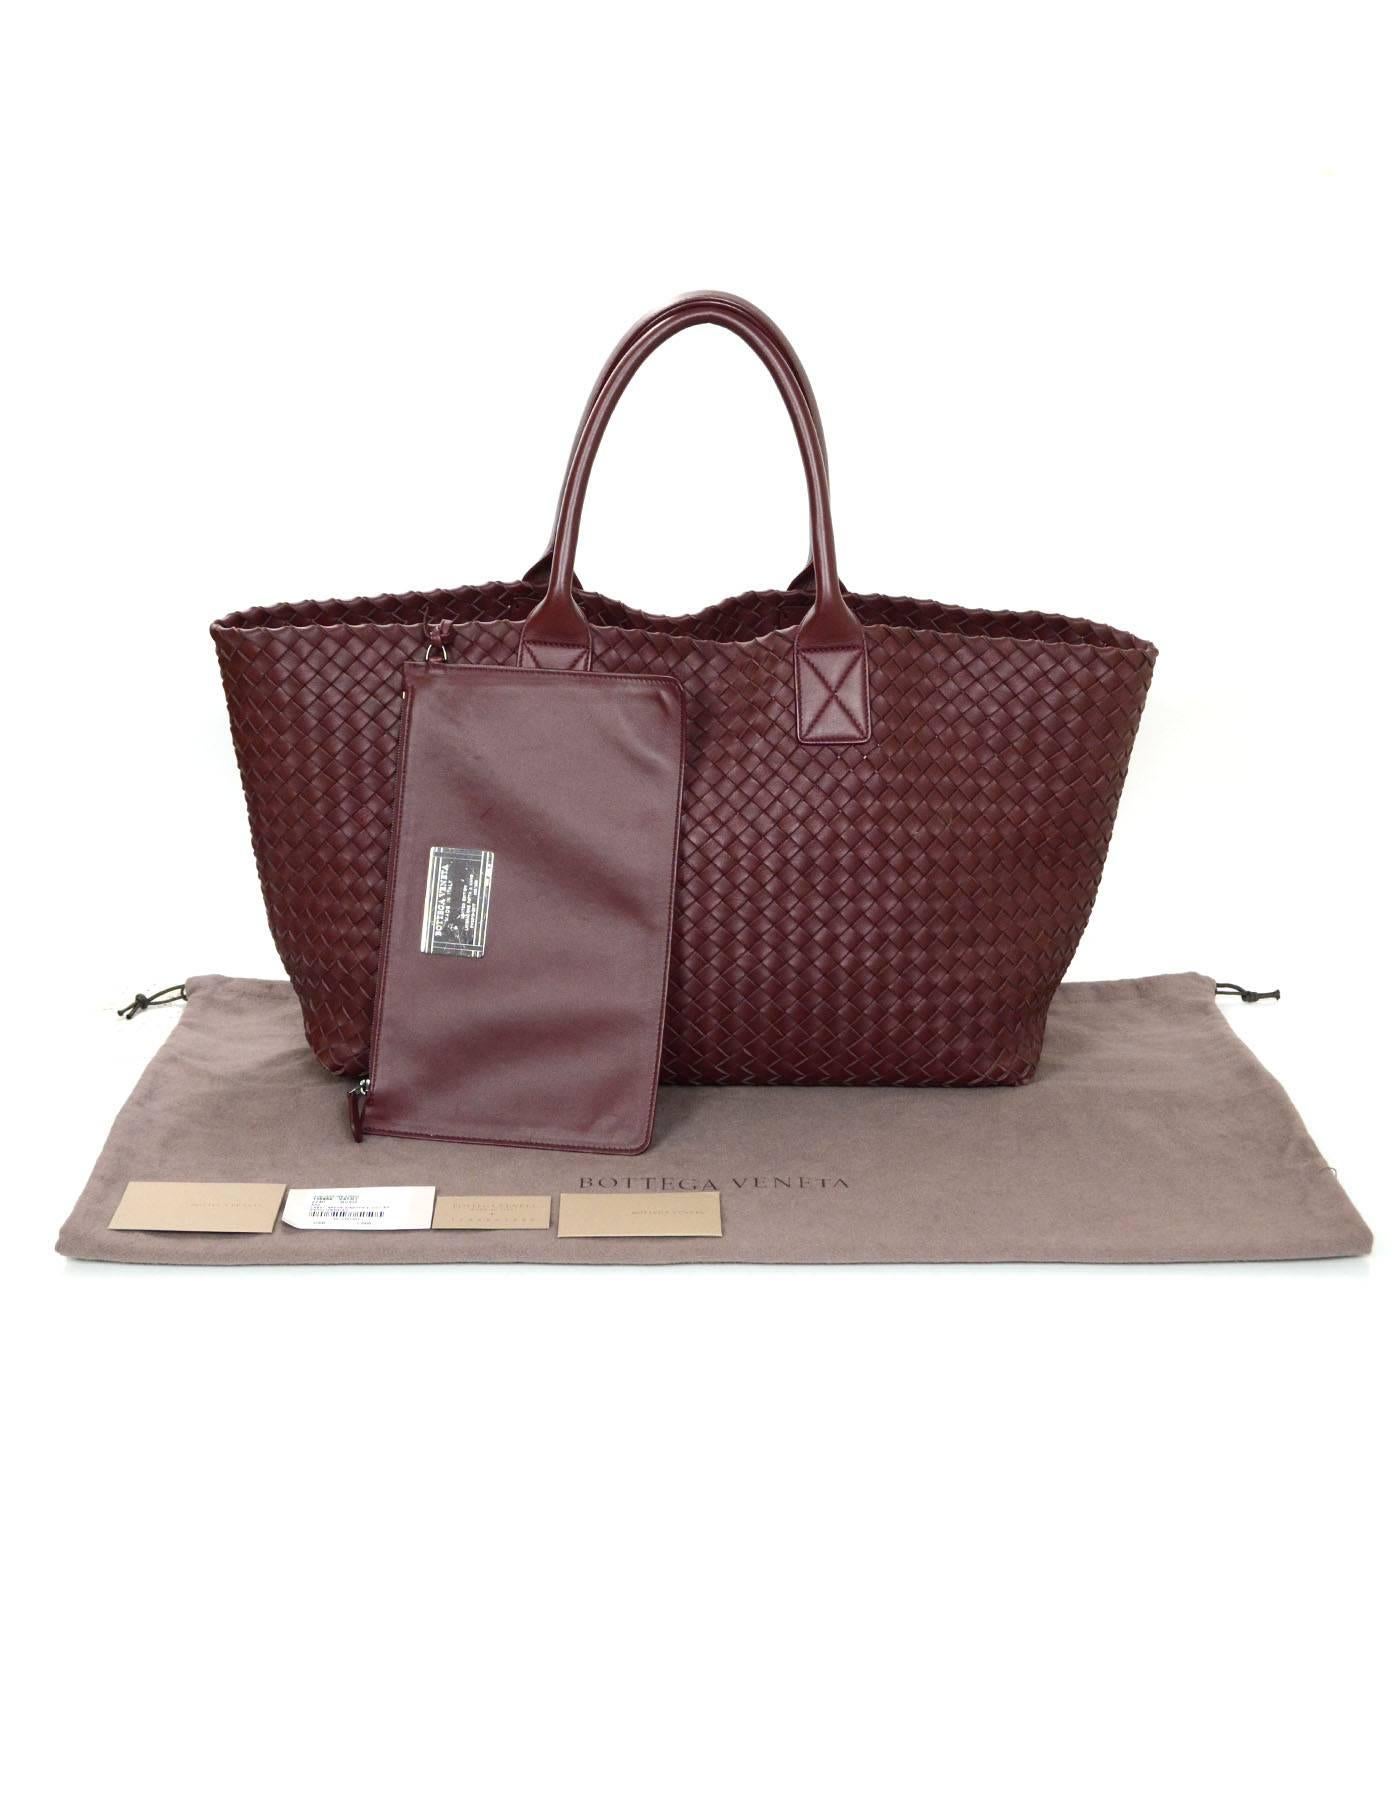 Bottega Veneta Barolo Burgundy Hand Woven Leather Medium Cabat Tote Bag $7, 000 1